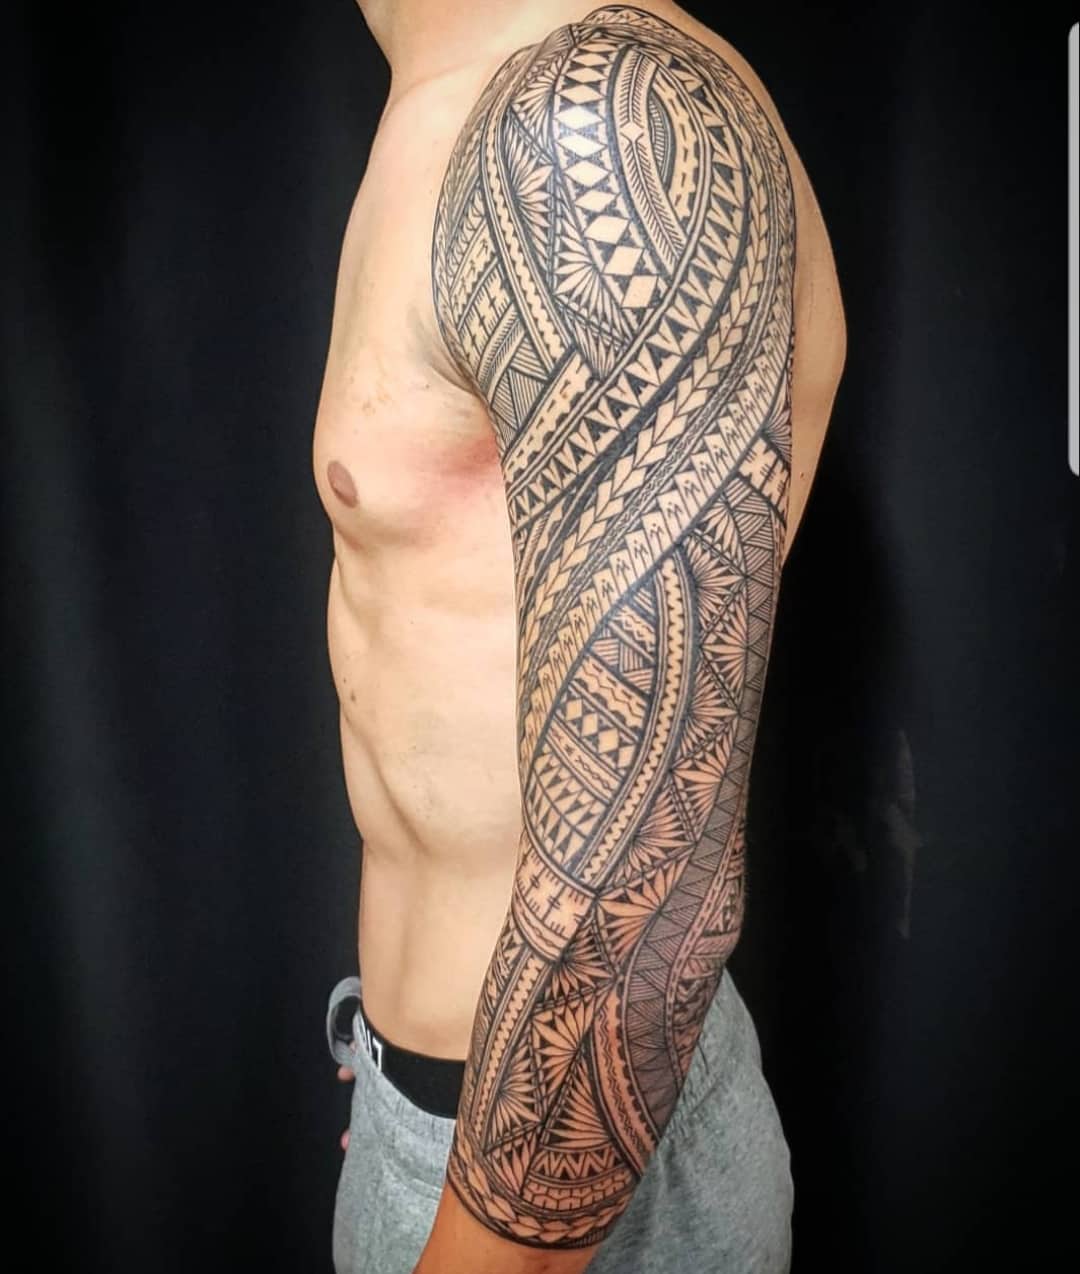 custom-freehand-samoan-polynesian-tatau-34-three-quarter-sleeve-black-work-fijian-tongan-south-pacific-blend-cultural-mix-otautahi-auckland-jordan-clarke.jpg